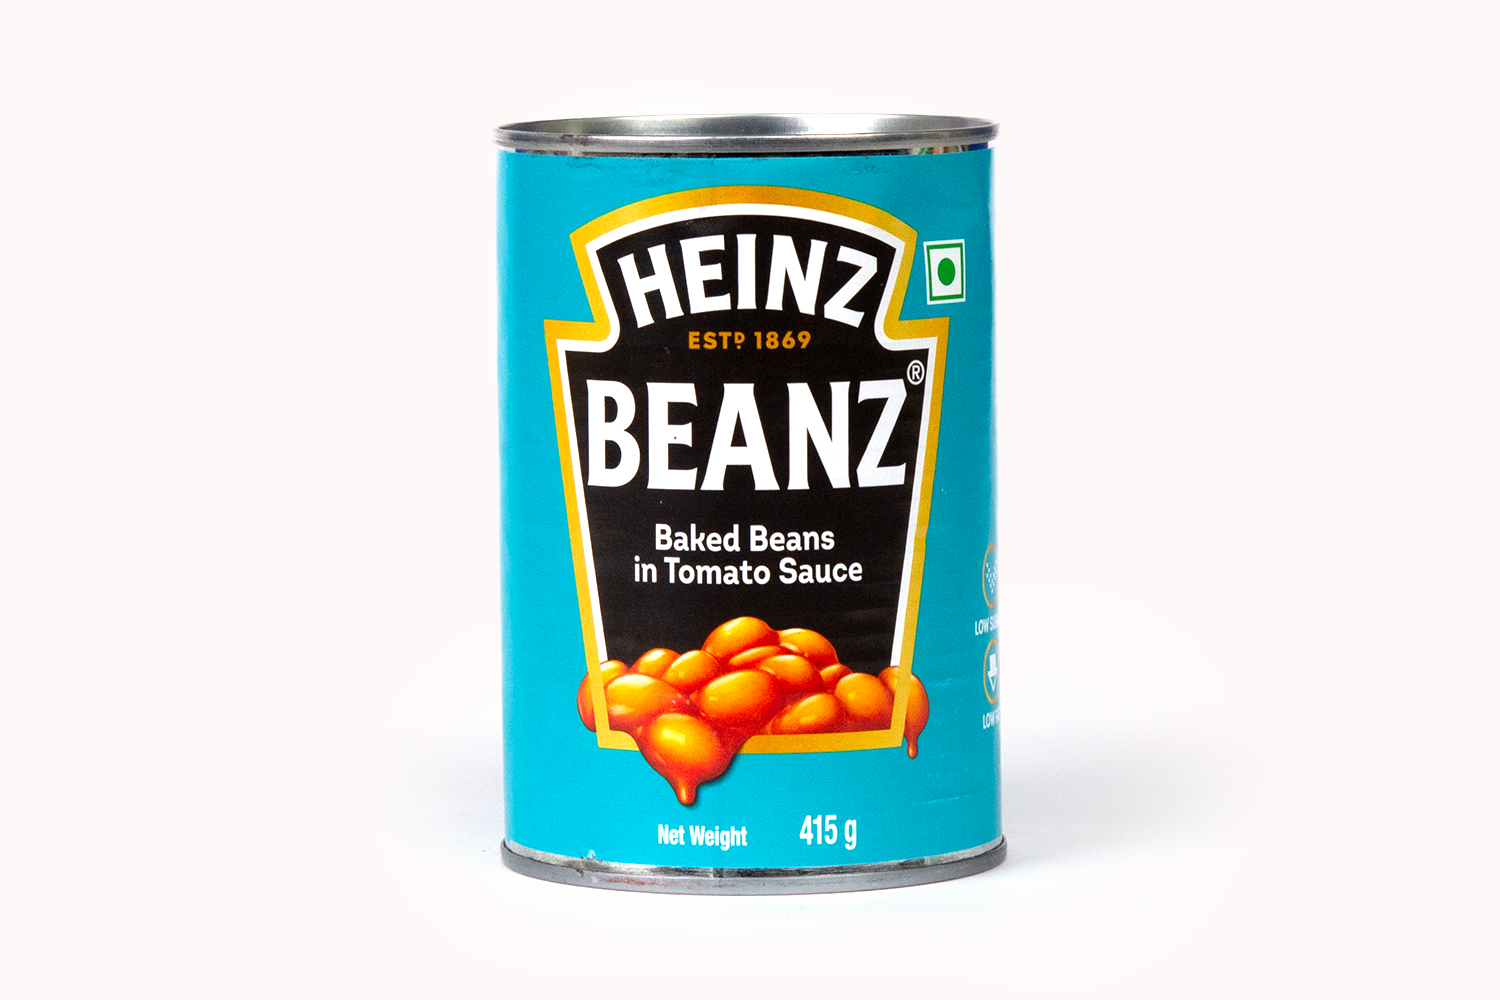 Heinz Beanz Baked Beans in Tomato Sauce